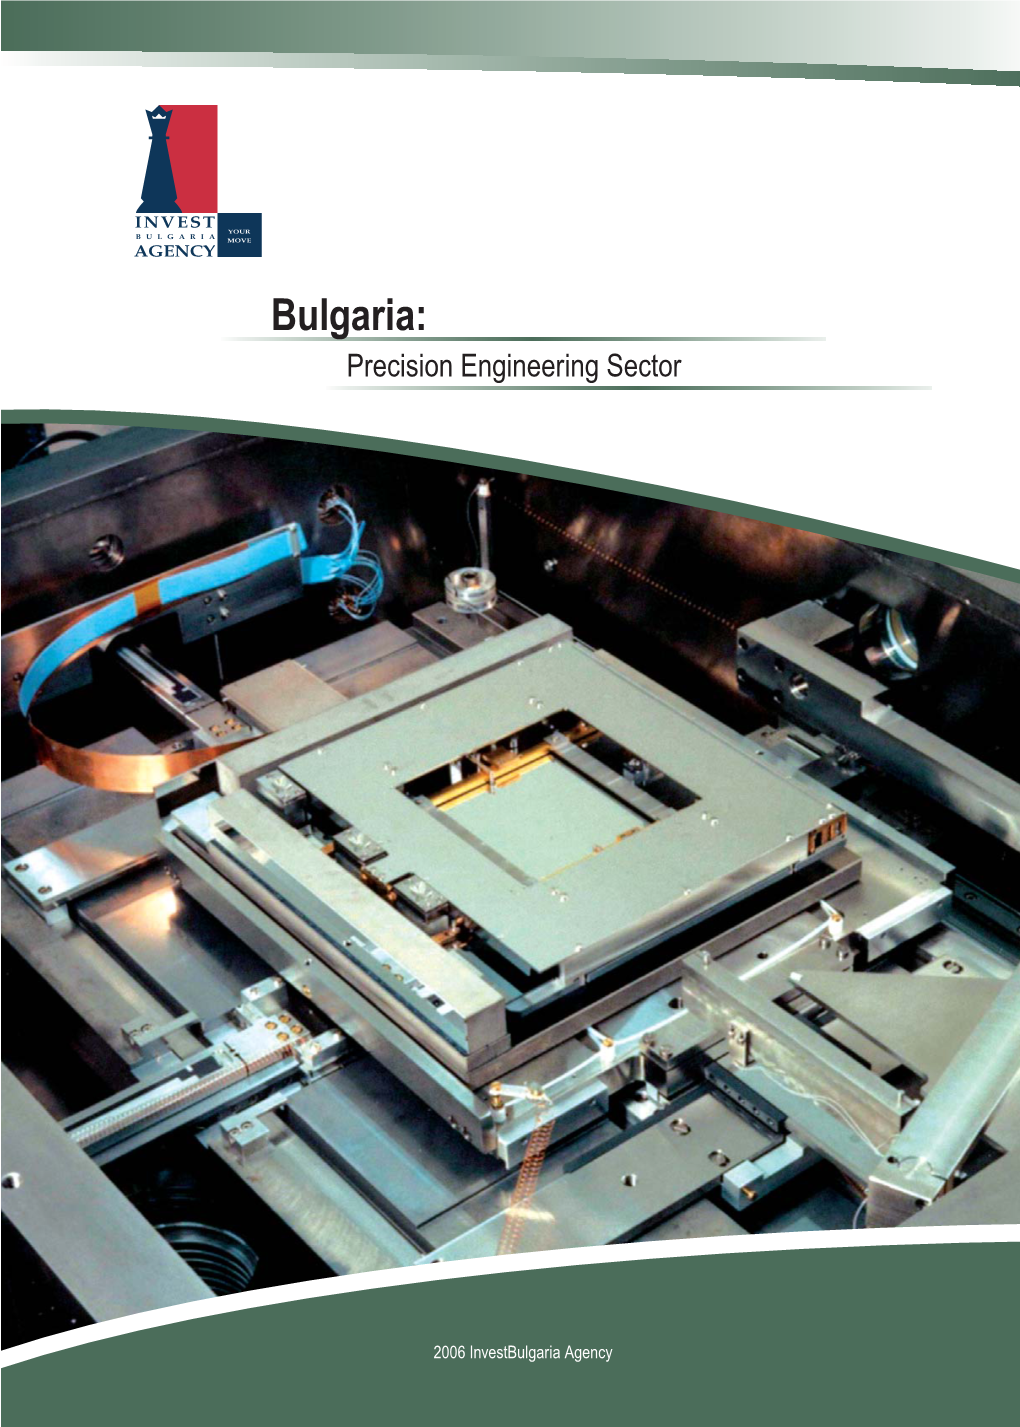 Bulgaria: Precision Engineering Sector